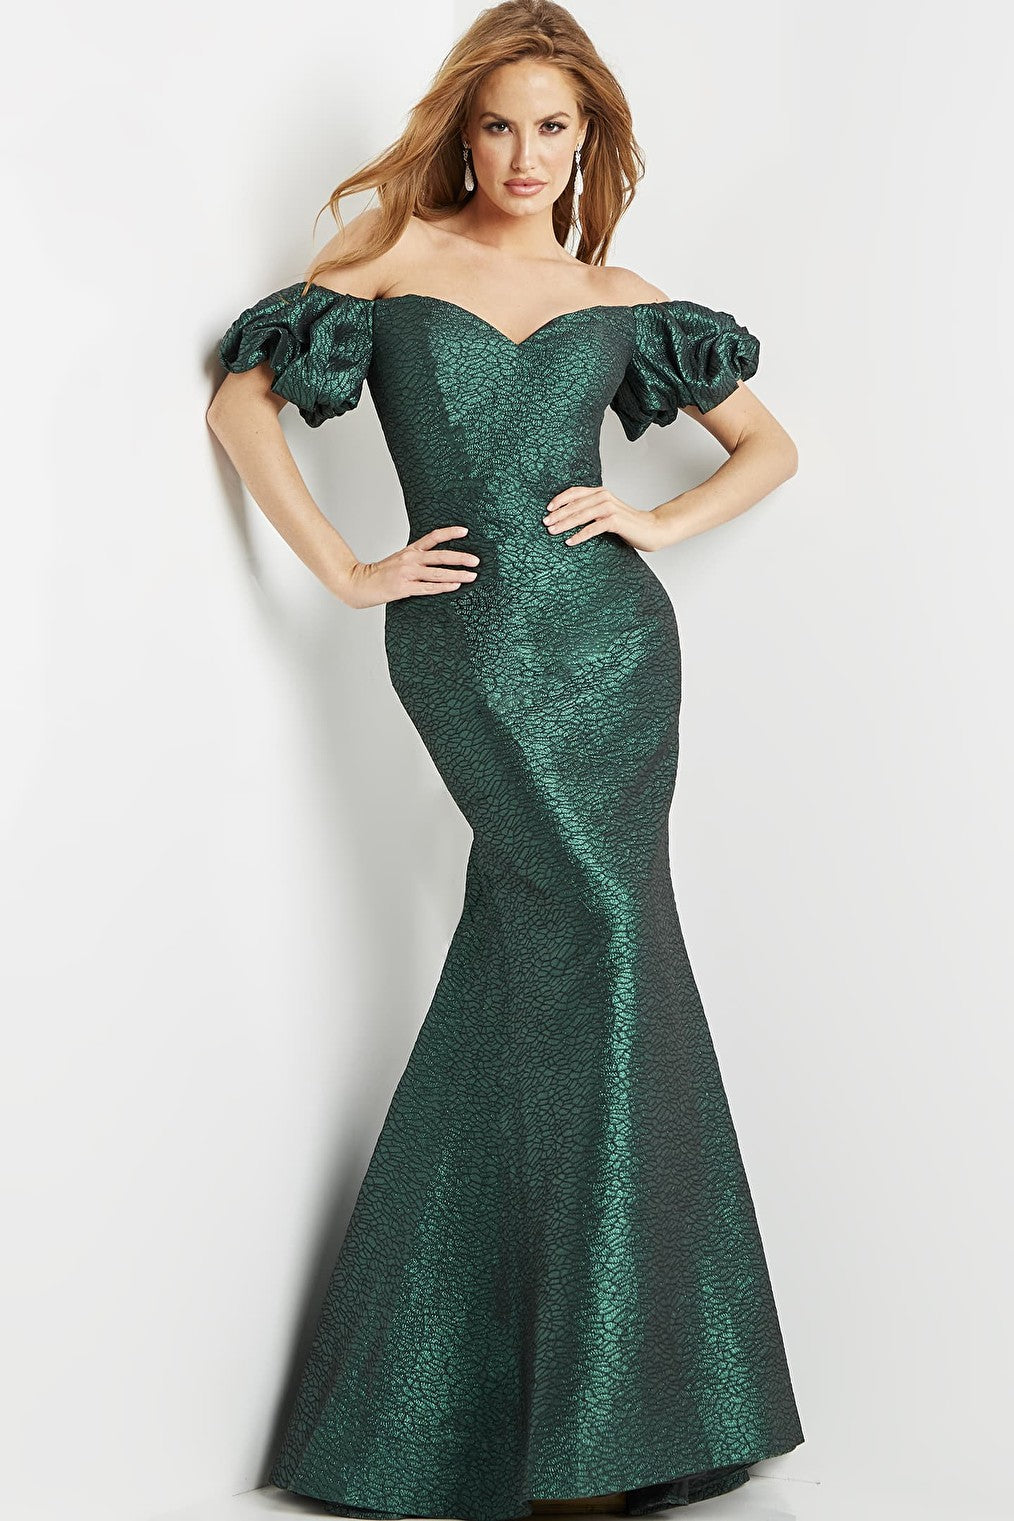 Green mermaid evening dress 24044